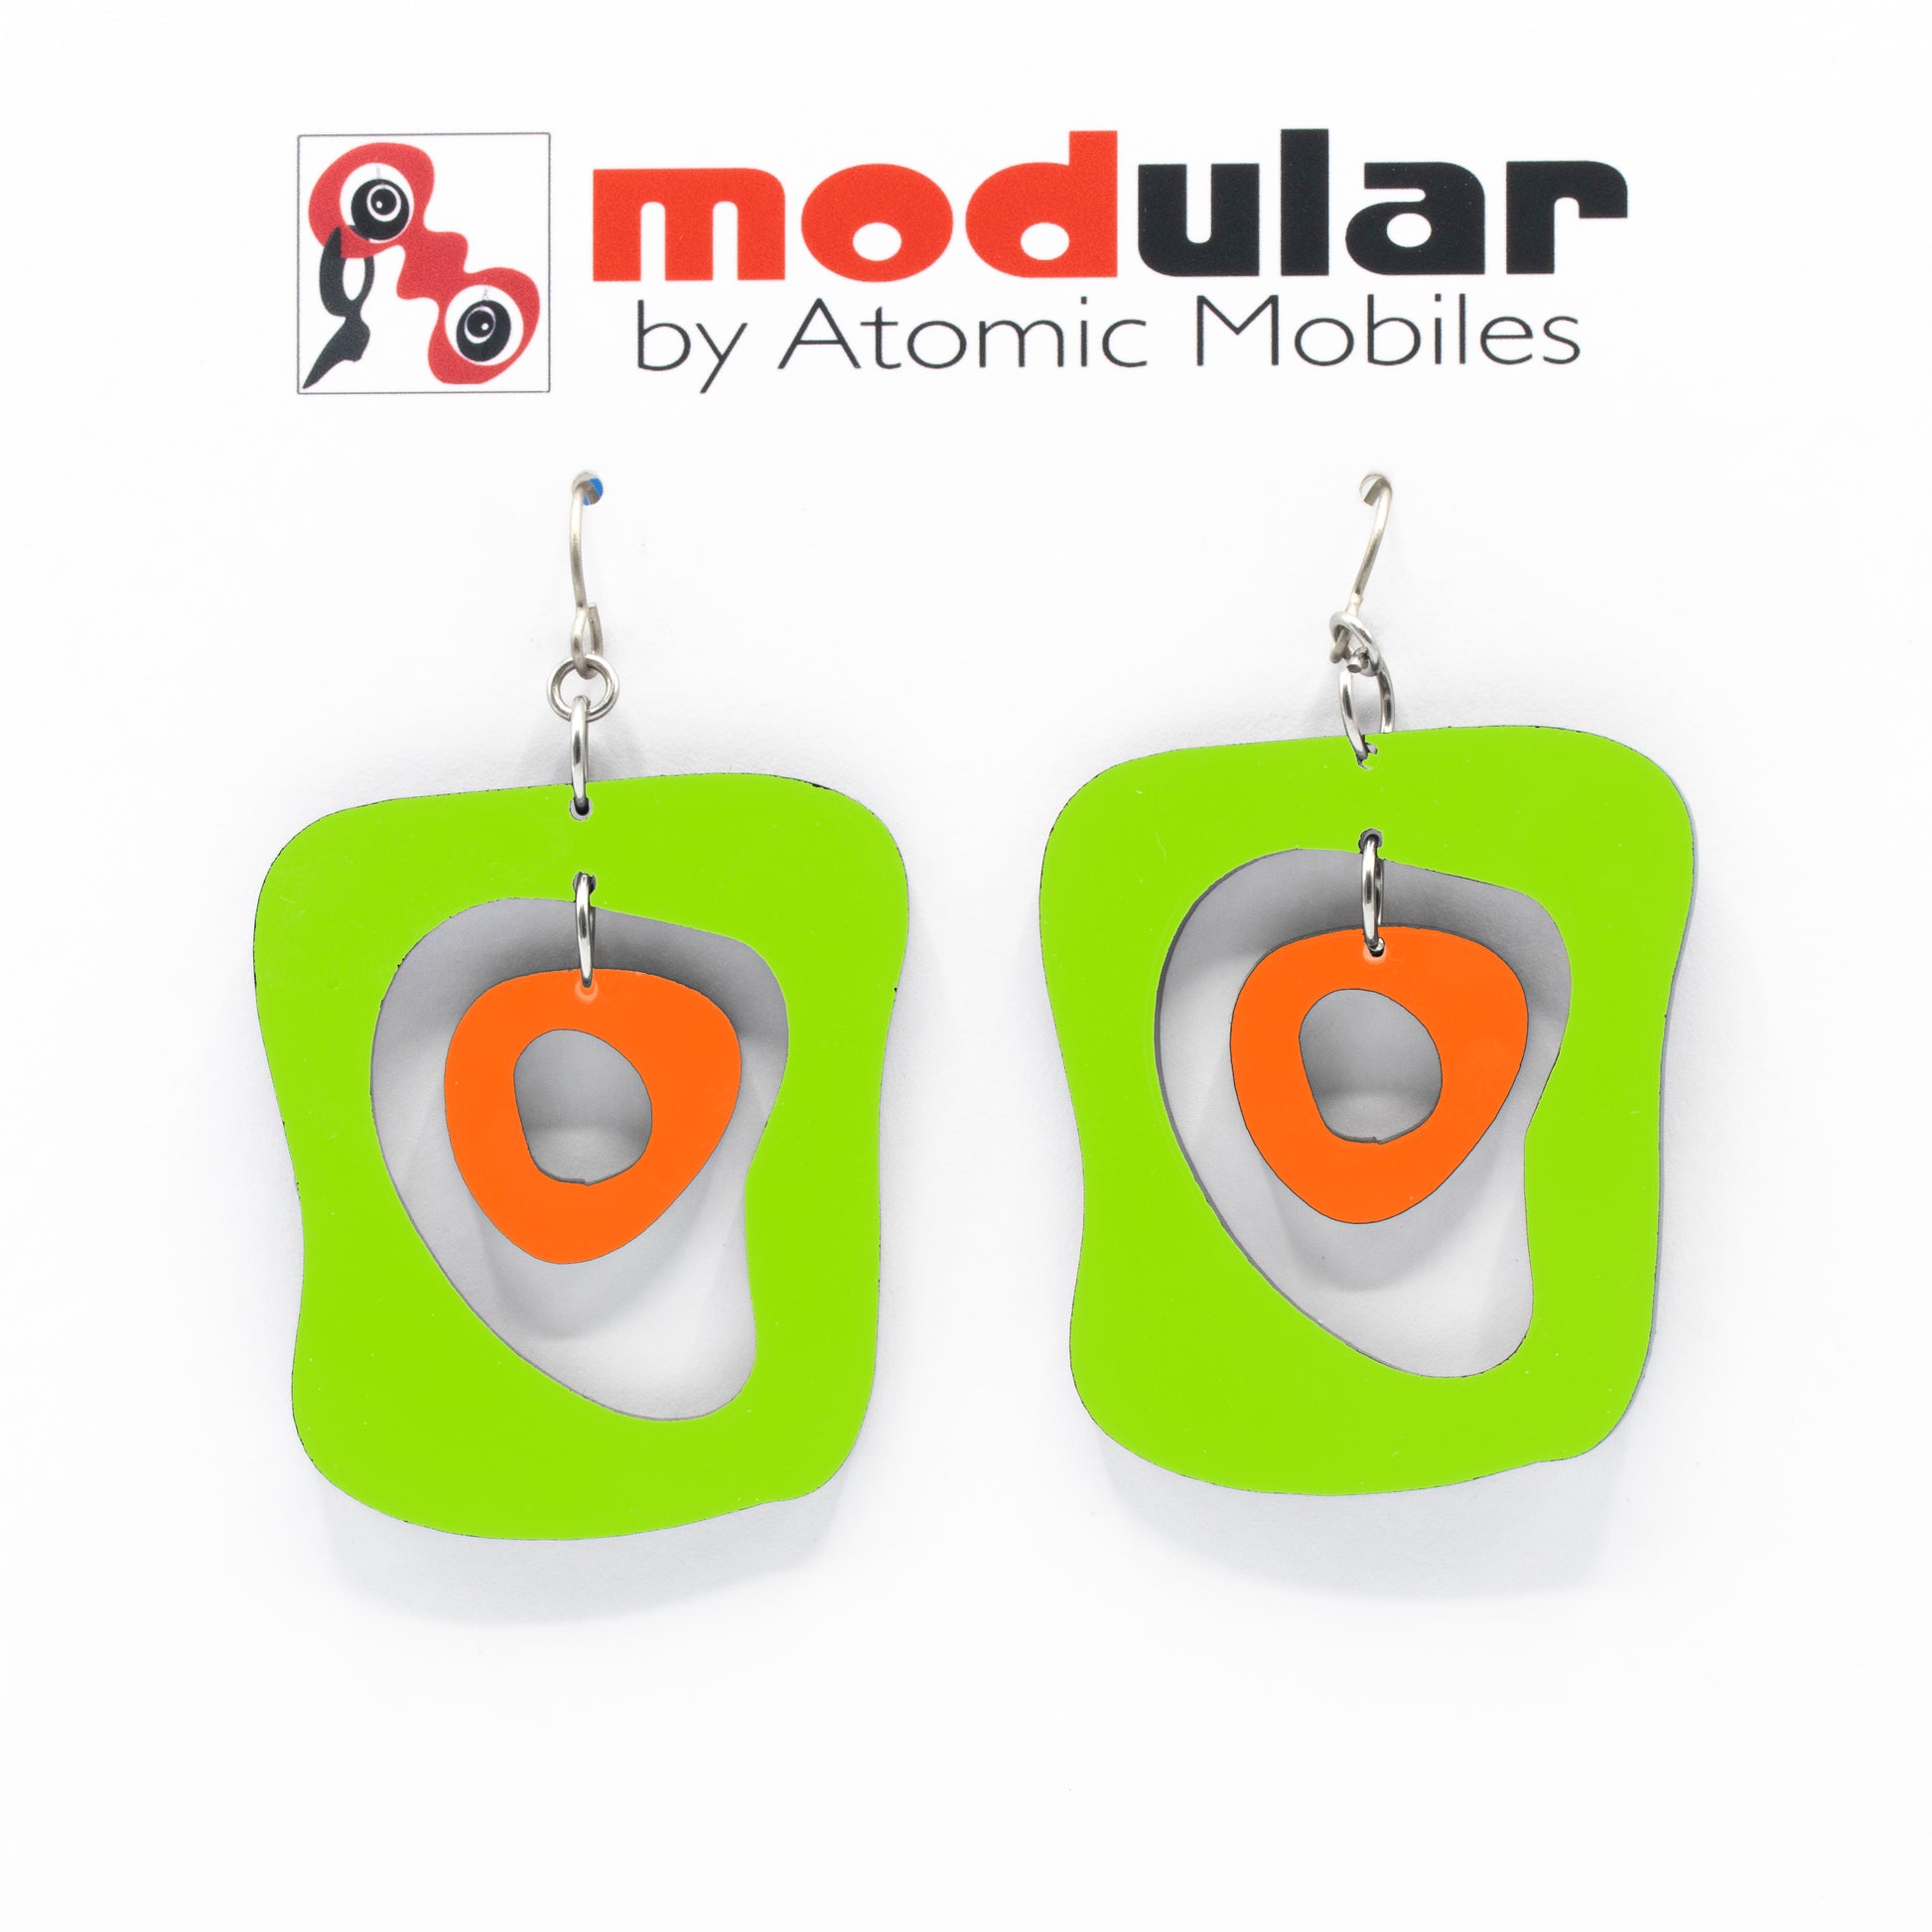 MODular Earrings - Mid Mod Statement Earrings in Lime and Orange by AtomicMobiles.com - mid century inspired modern art dangle earrings